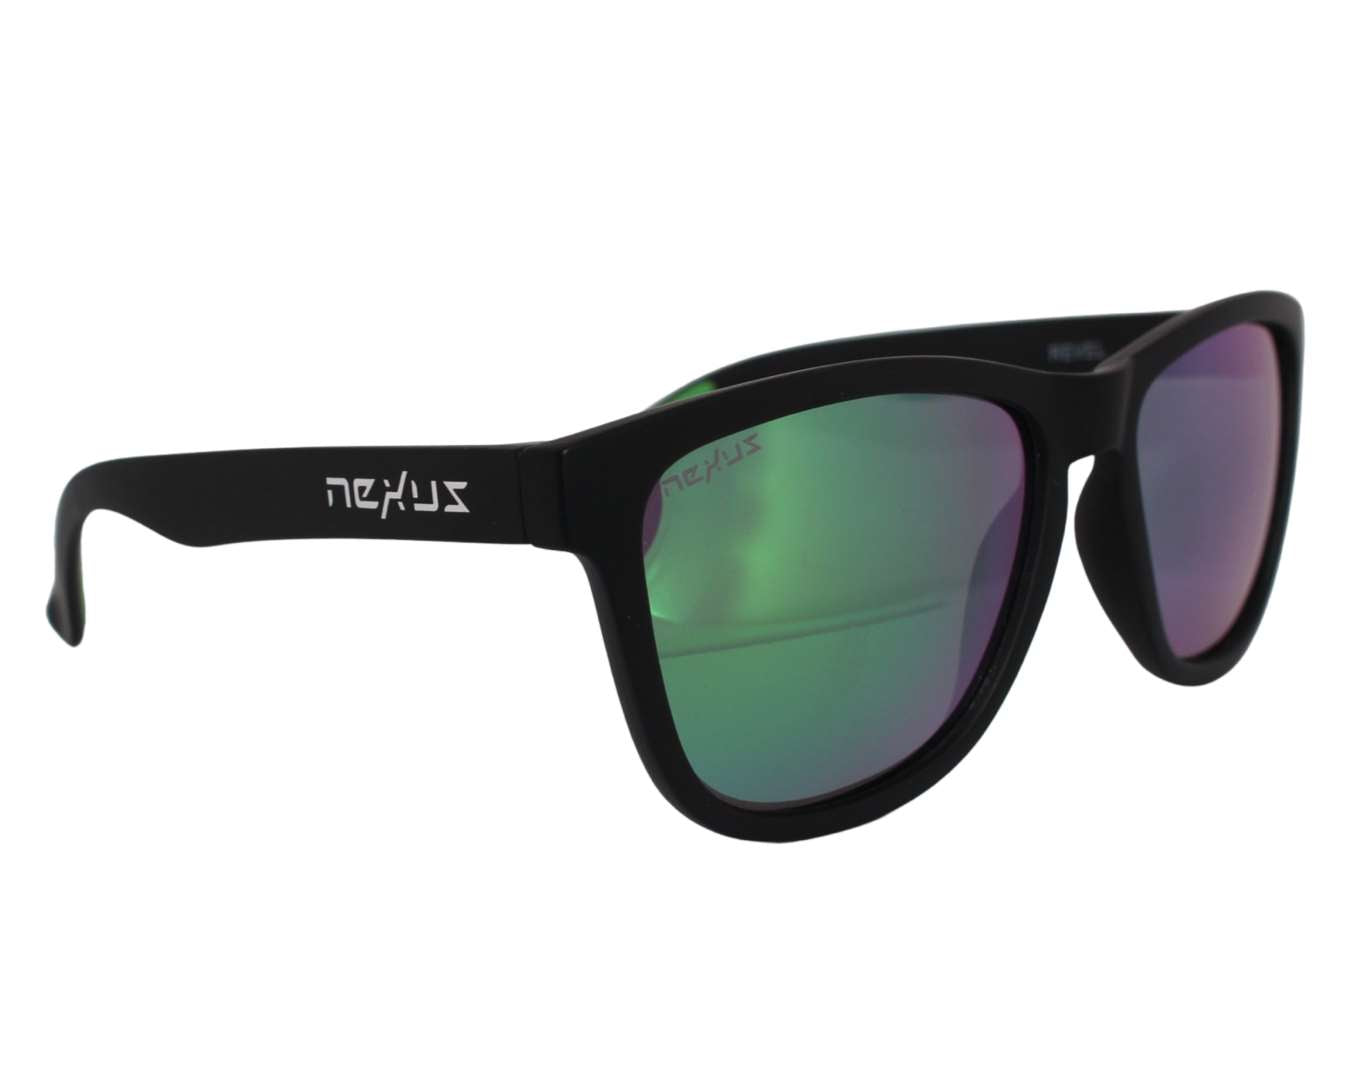 Nexus Sunglasses Revel